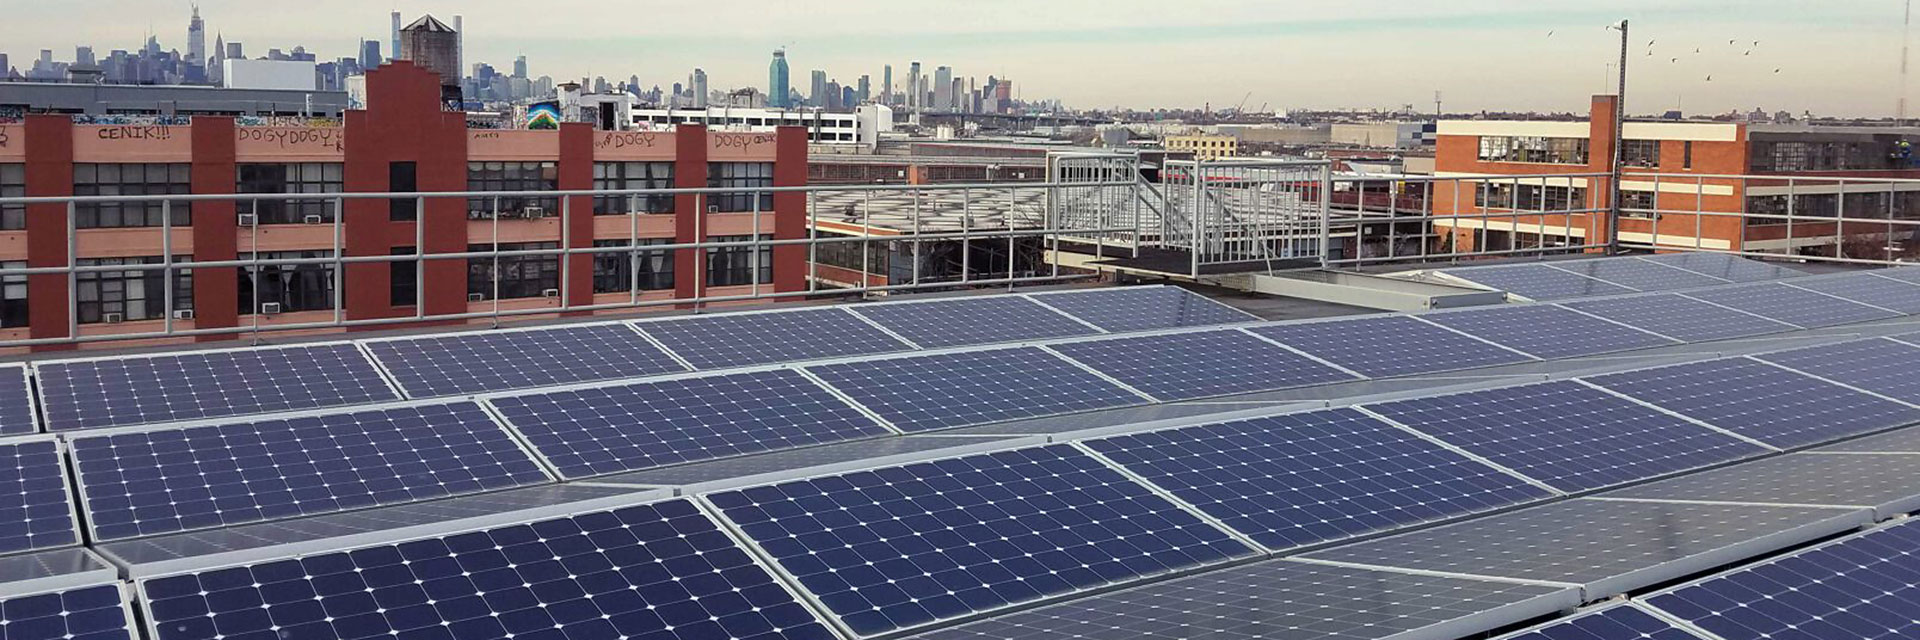 Roofto p - solar installed in Bushwick, Brooklyn.